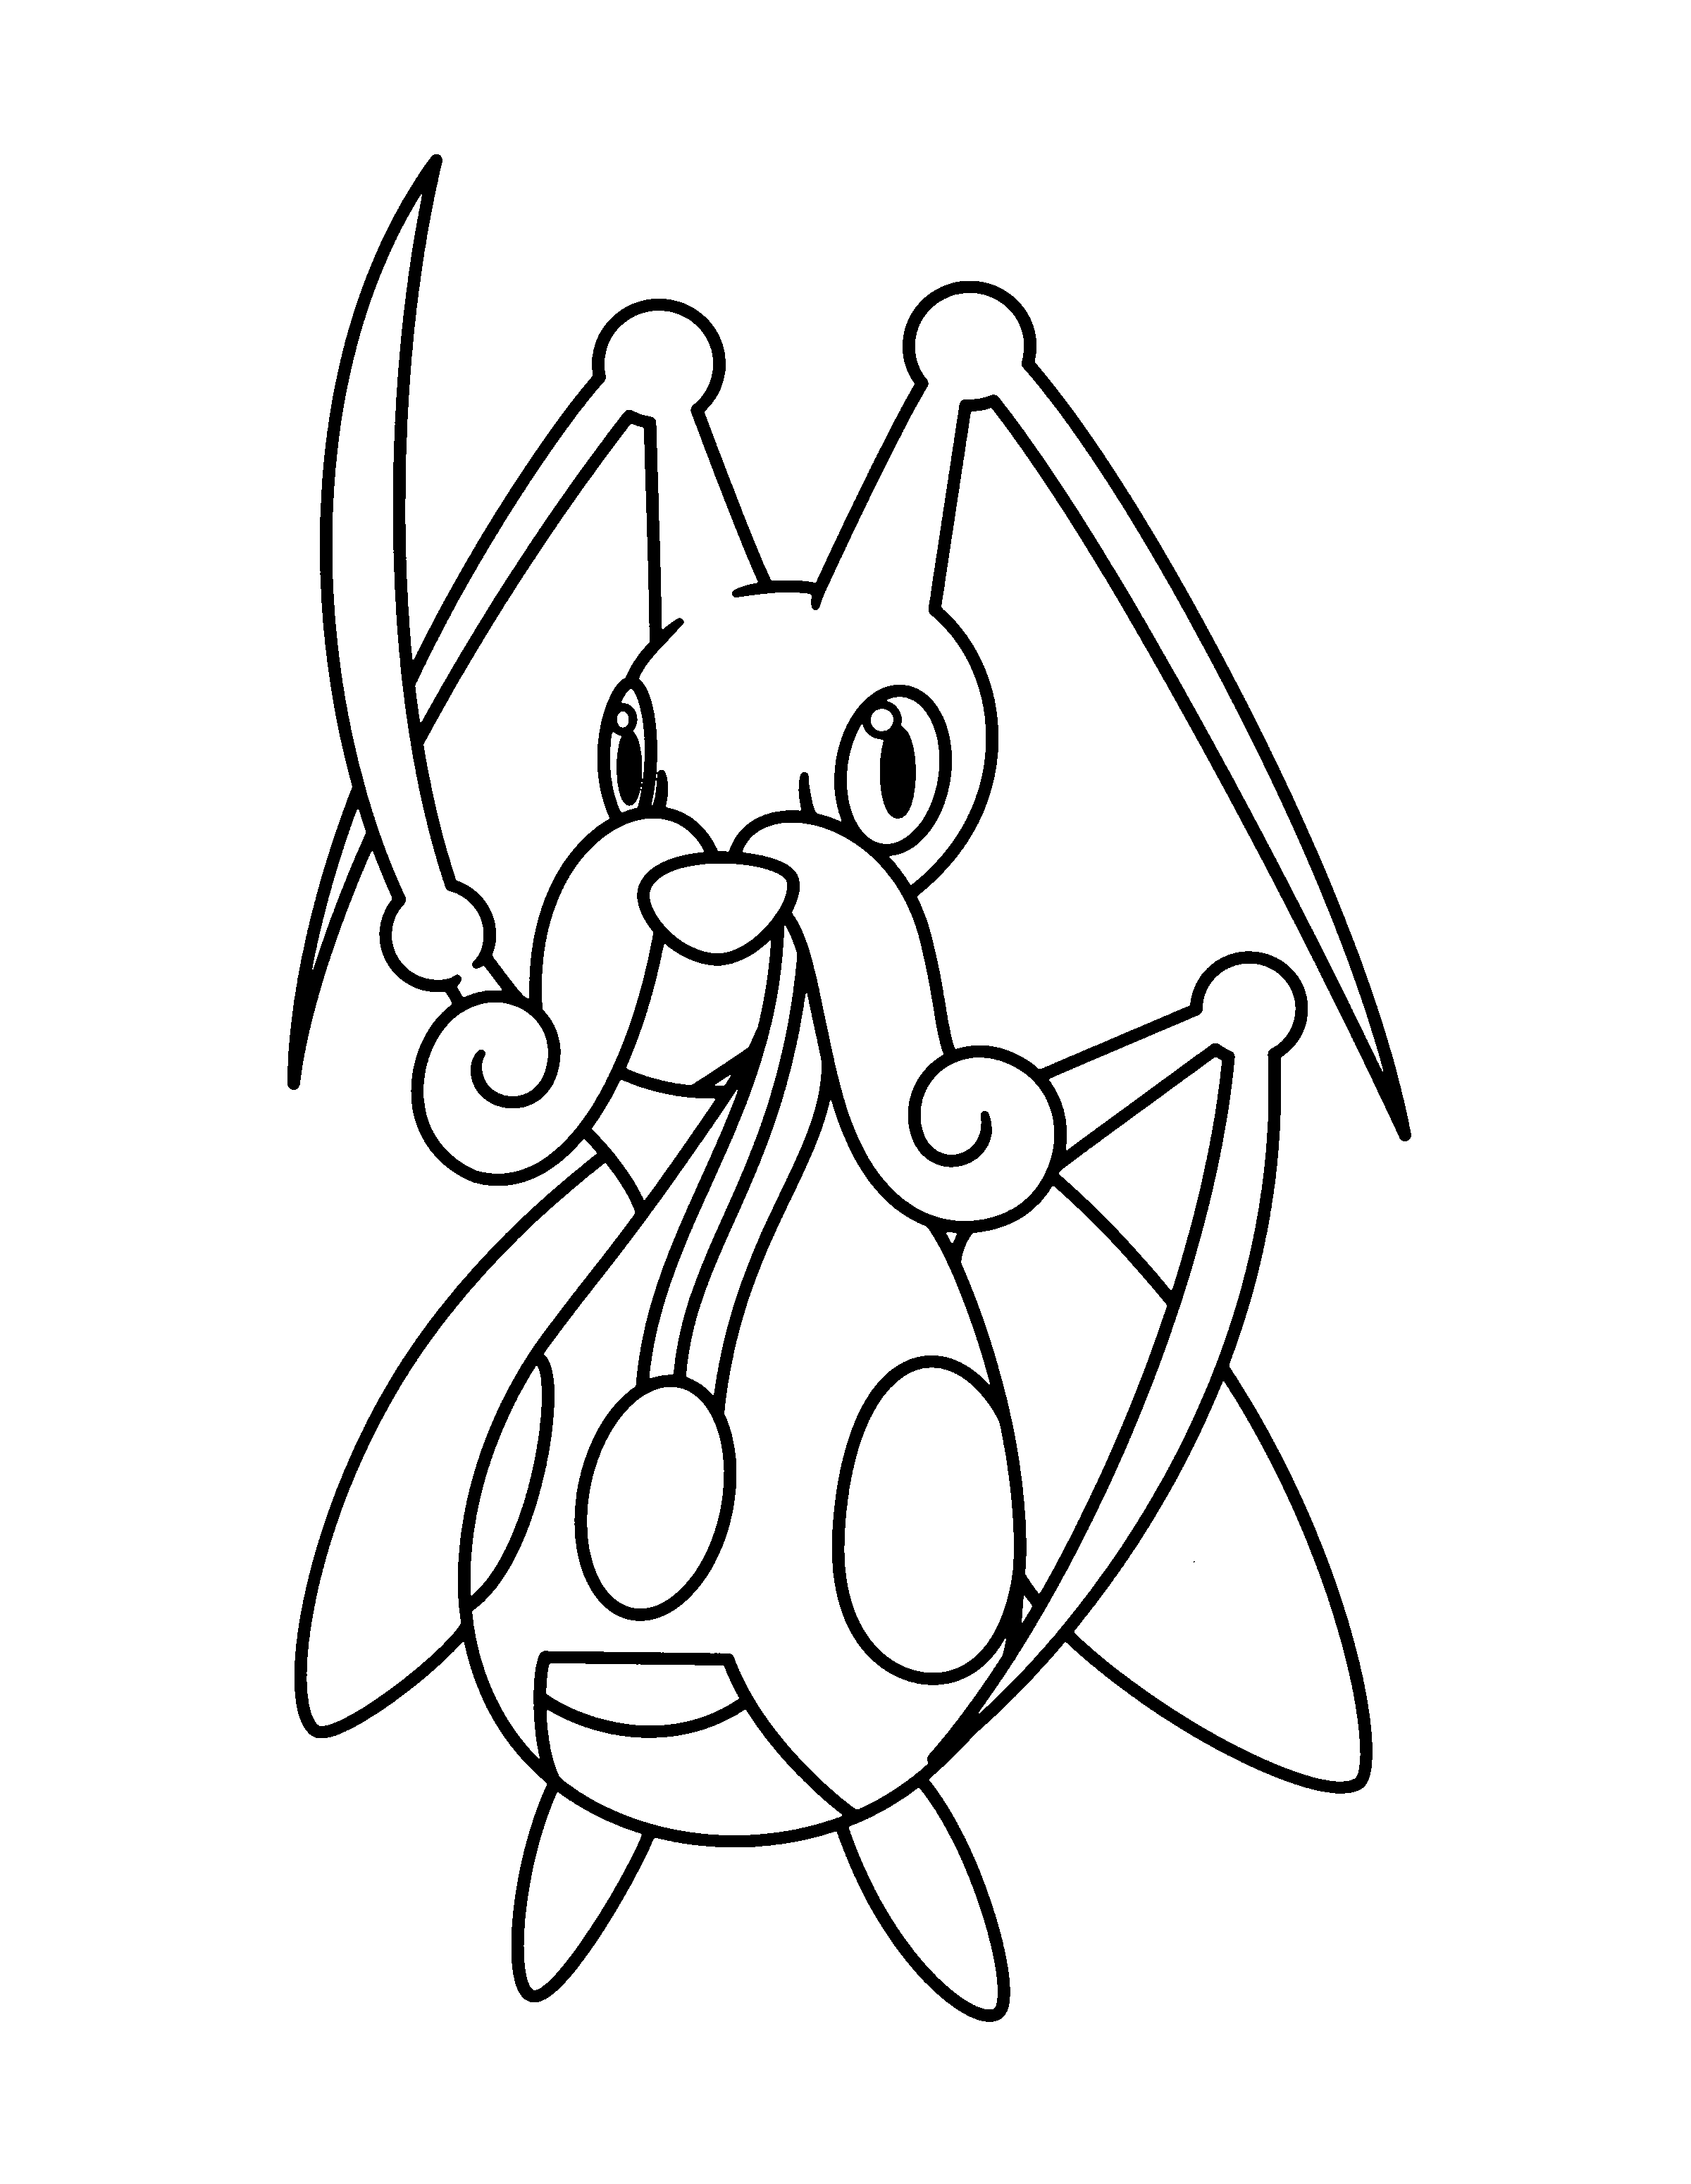 Pokemon Kricketune coloring page